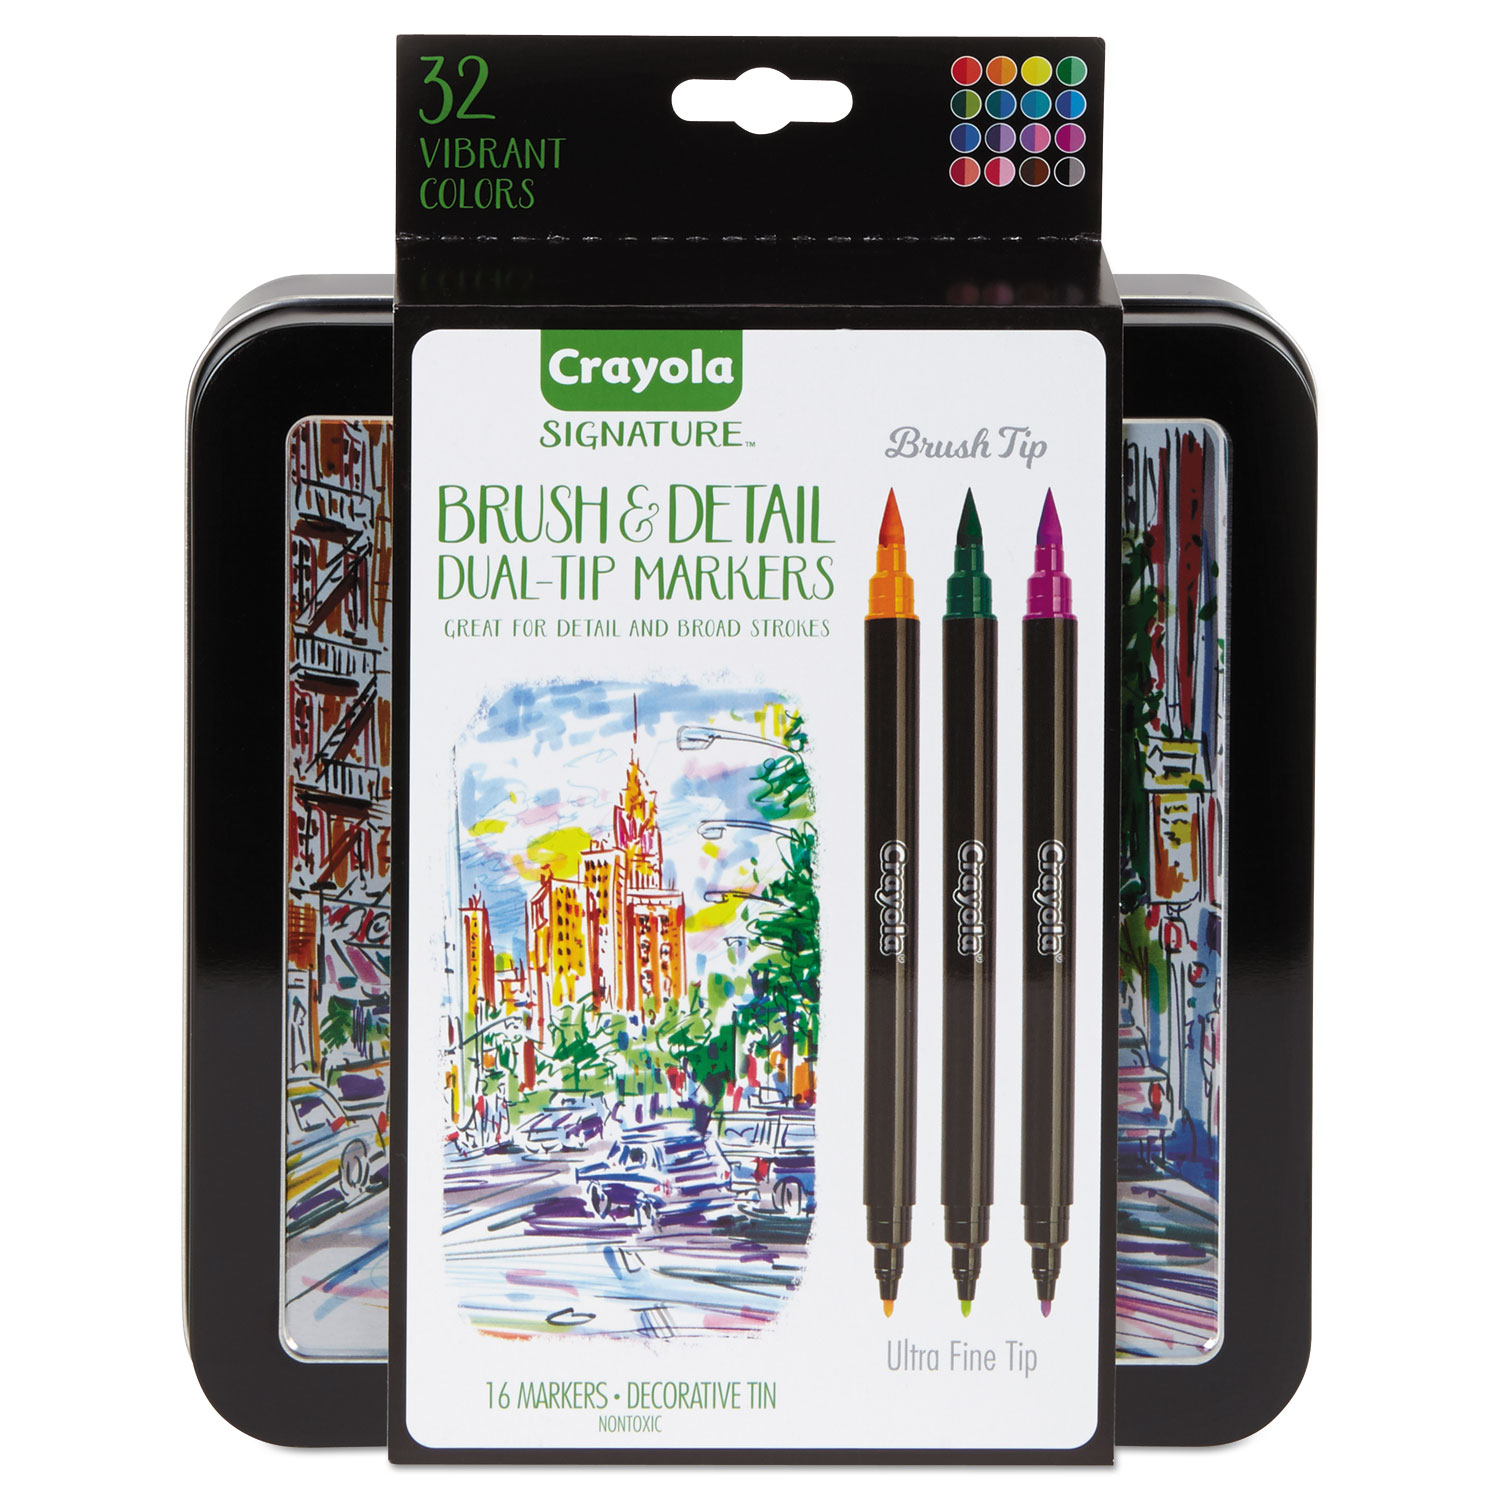 Crayola Portfolio Series Oil Pastels, 12 Assorted Colors, 300